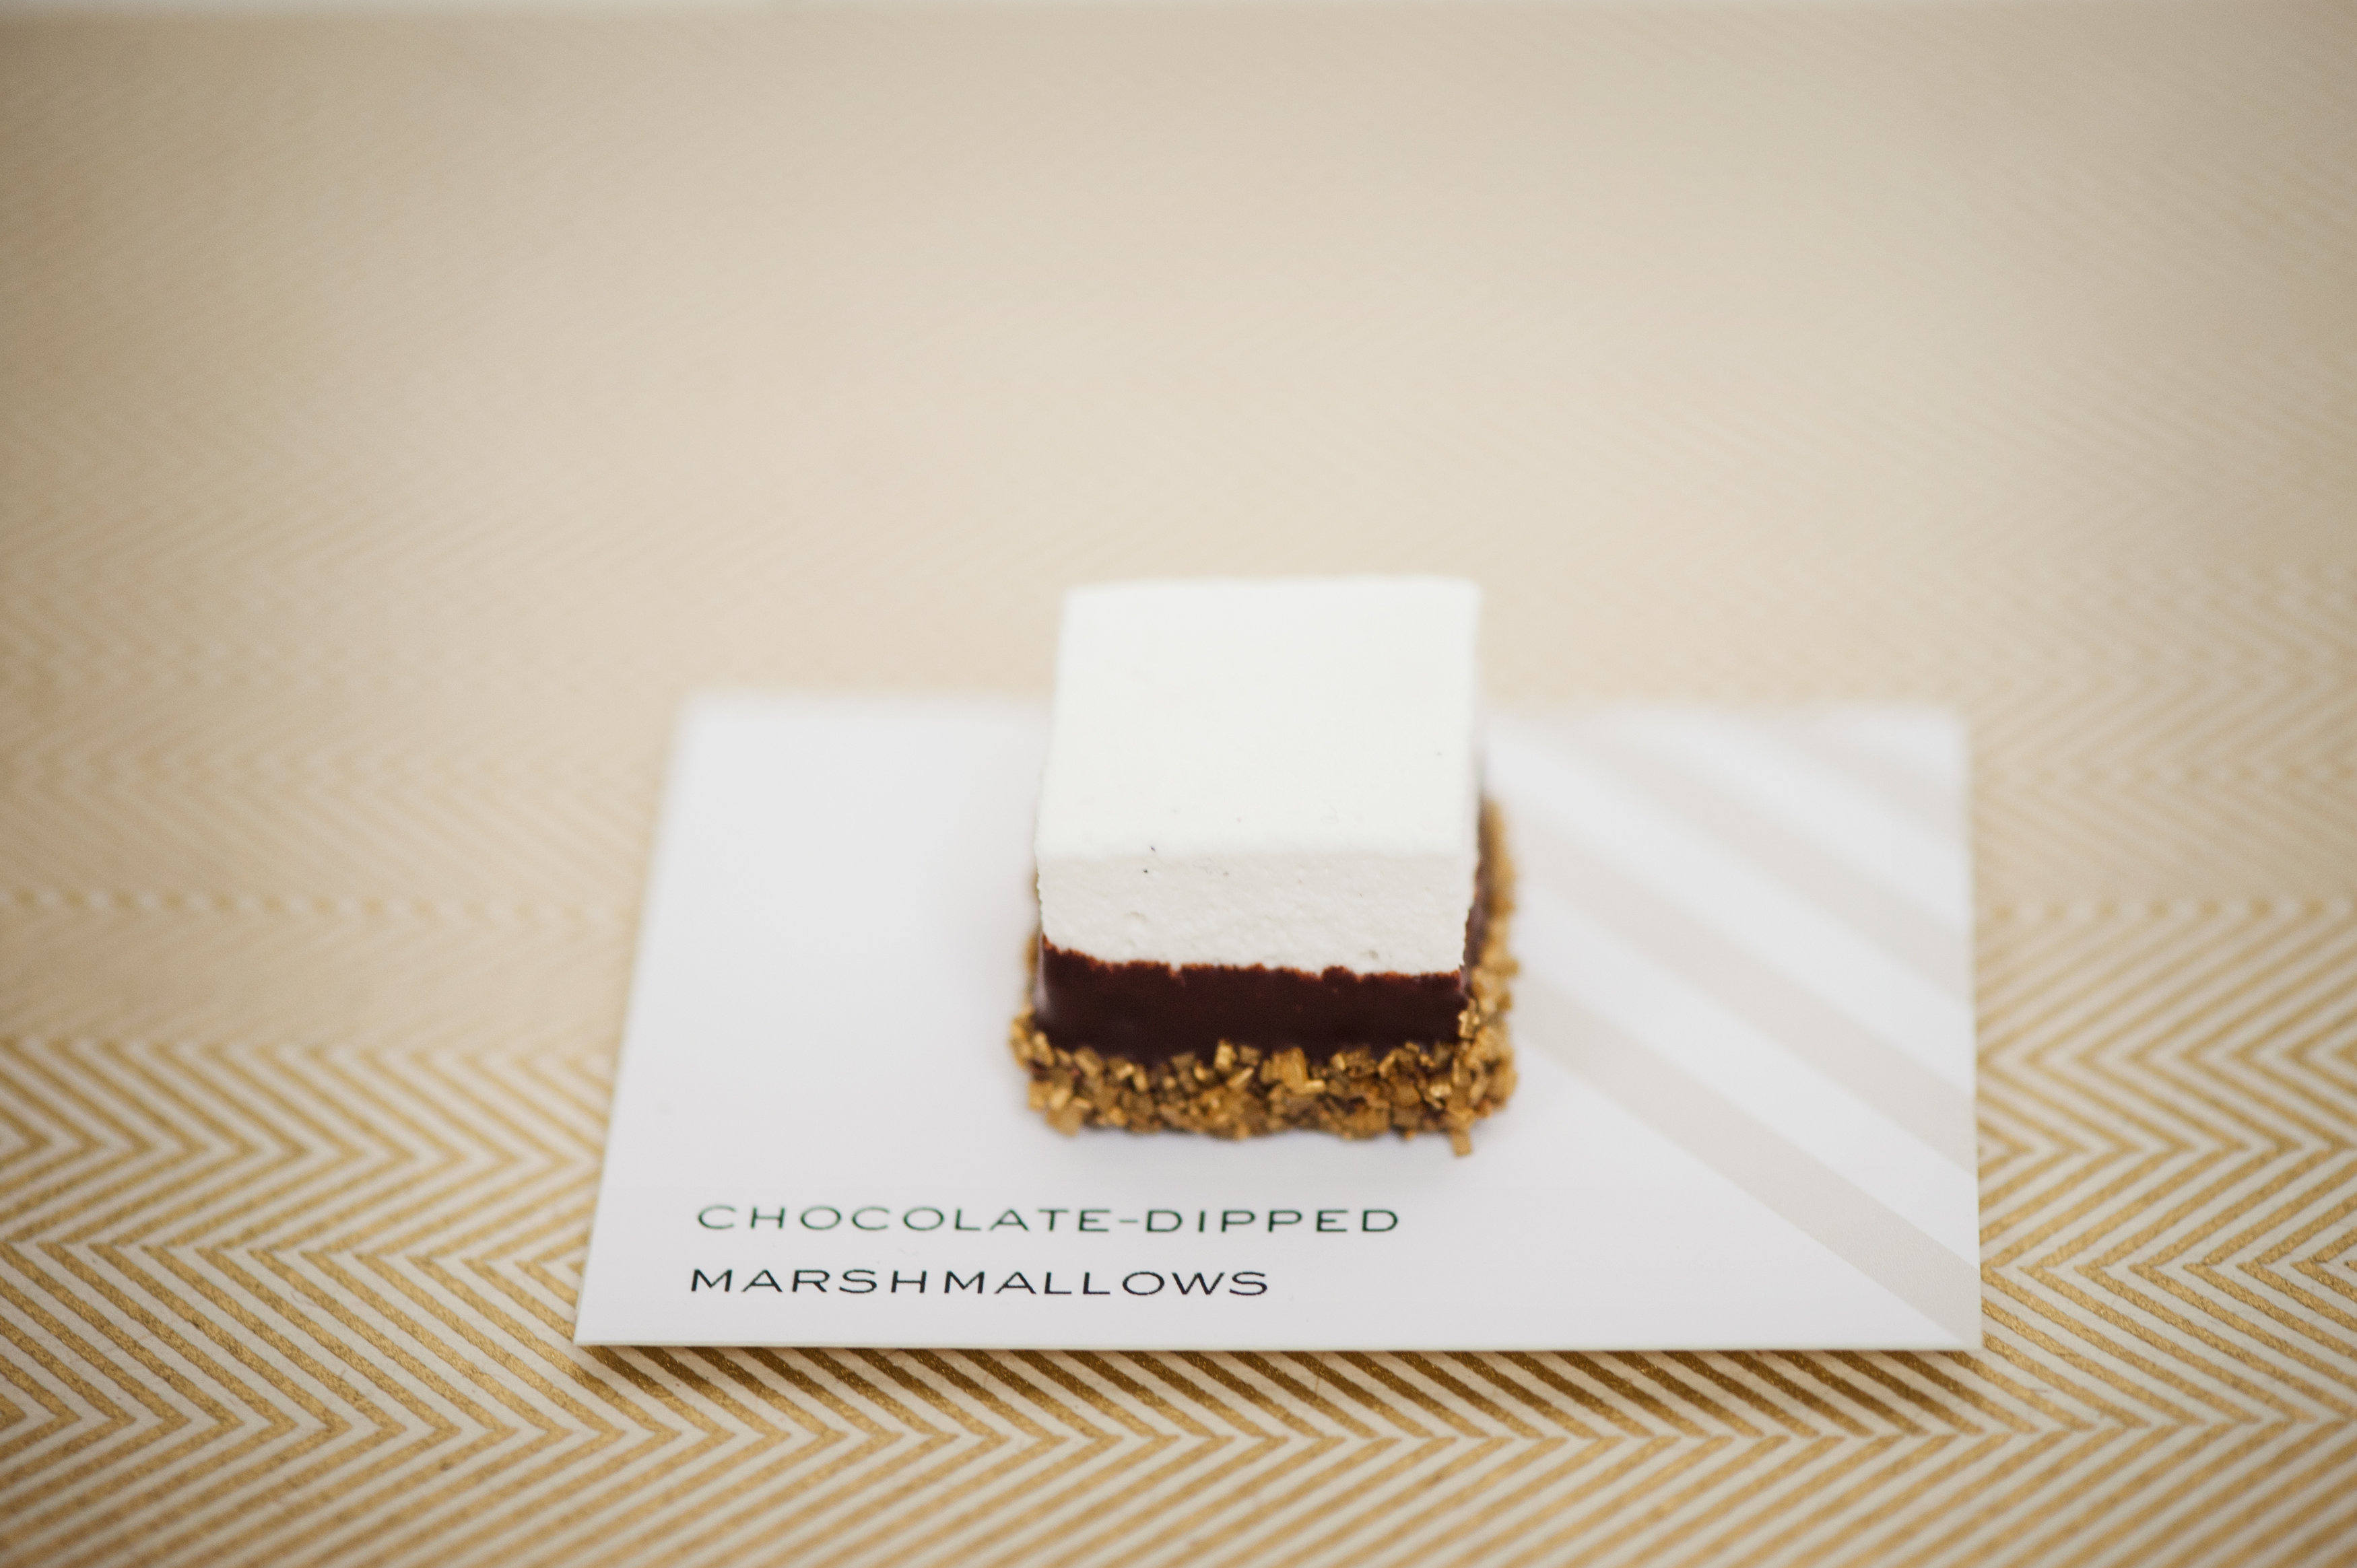 Chocolate Dipped Marshmallow Smores Bar at Reception